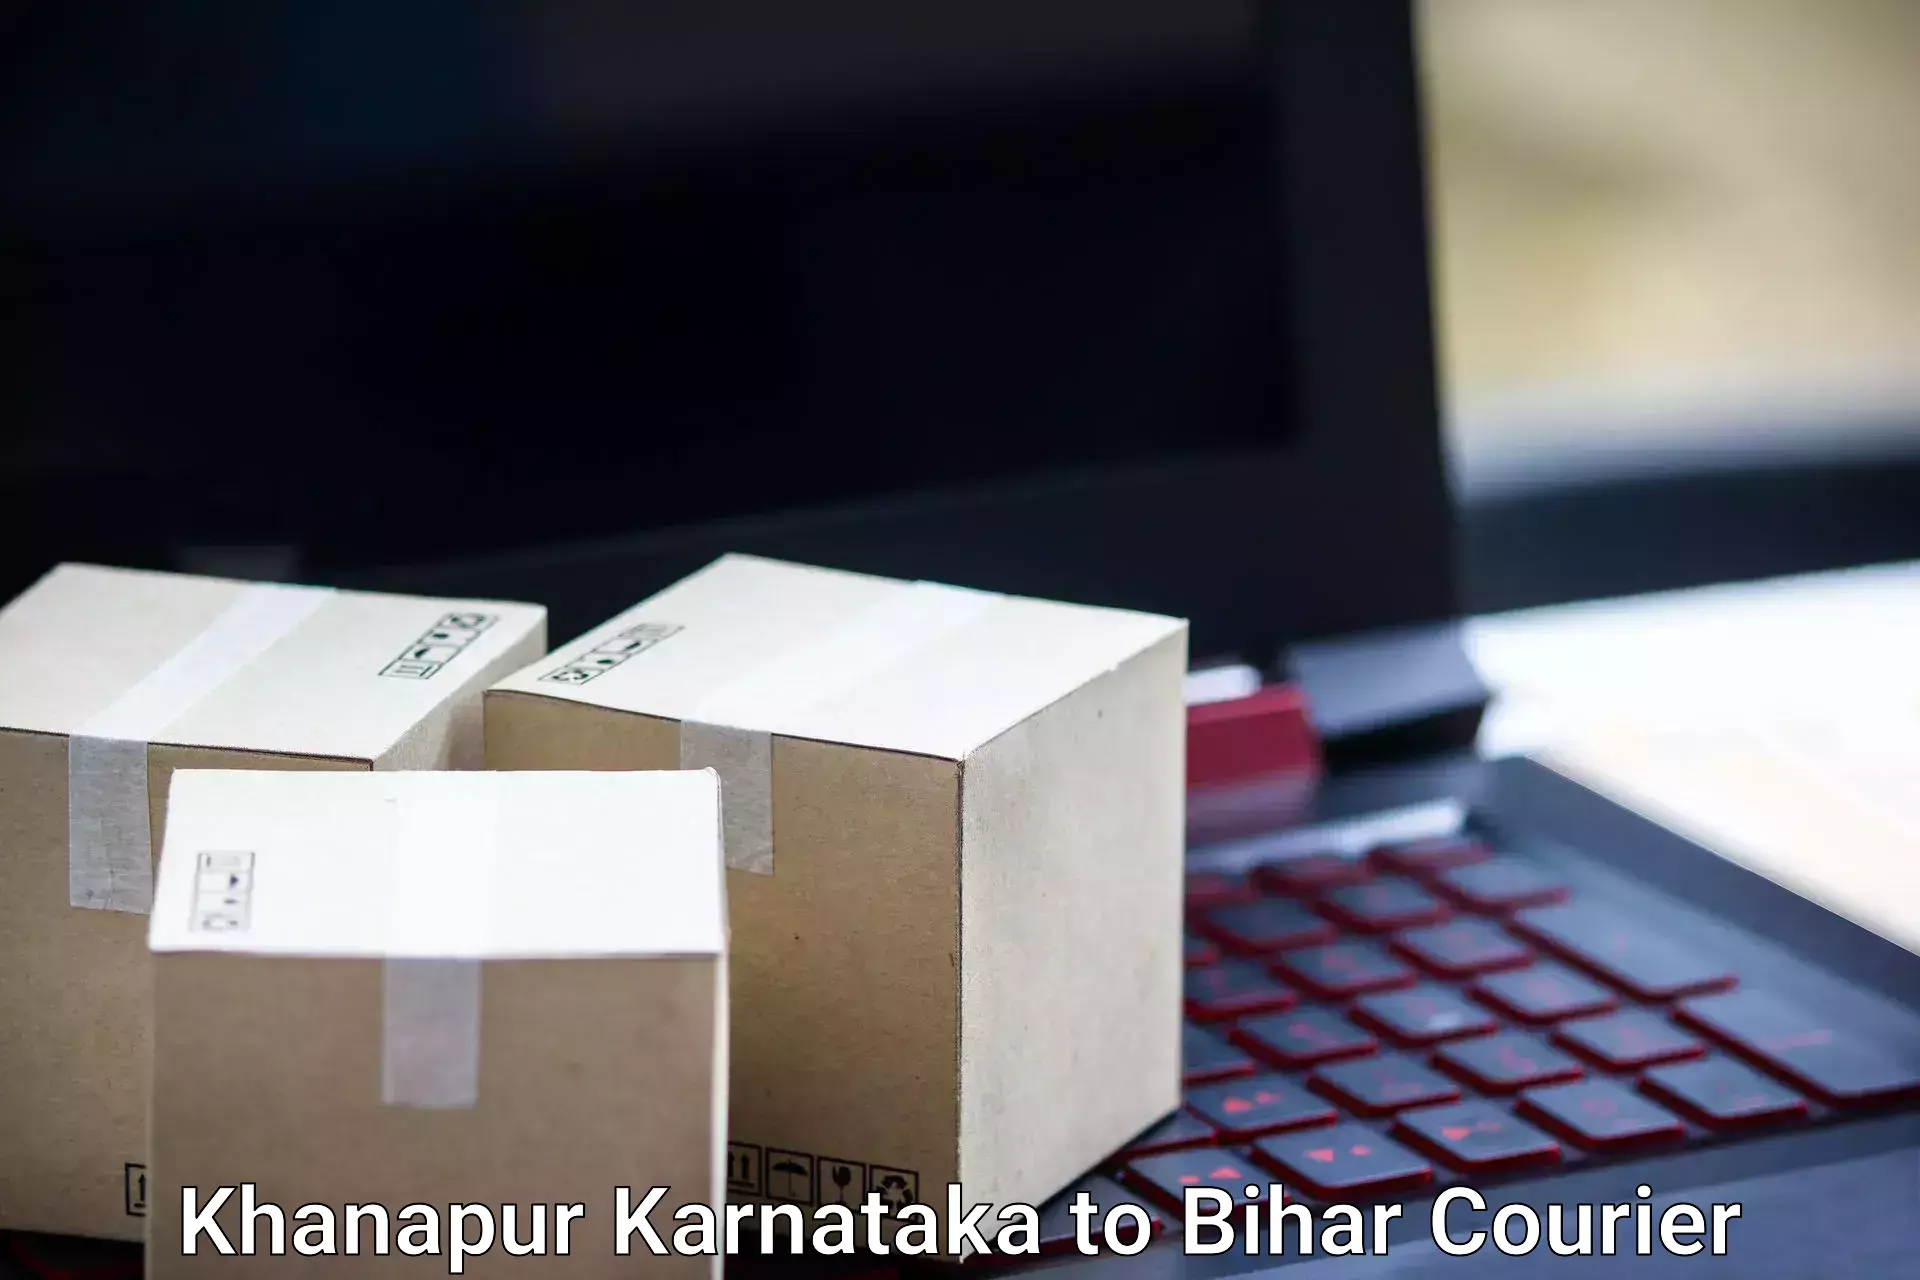 Baggage delivery scheduling Khanapur Karnataka to Bhojpur